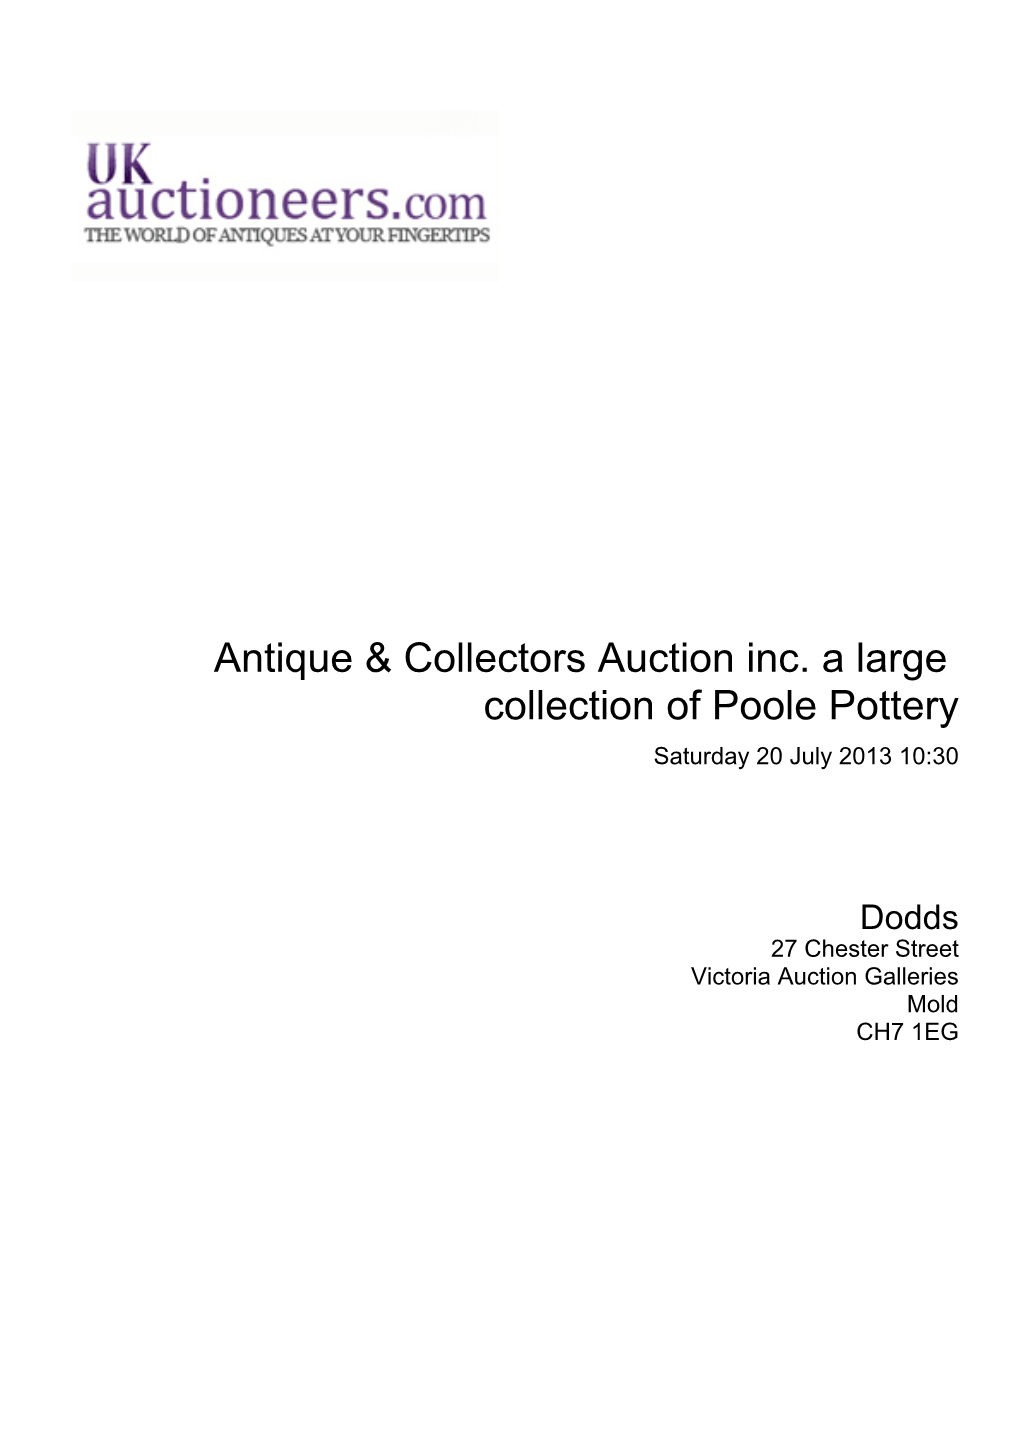 Antique & Collectors Auction Inc. a Large Collection of Poole Pottery